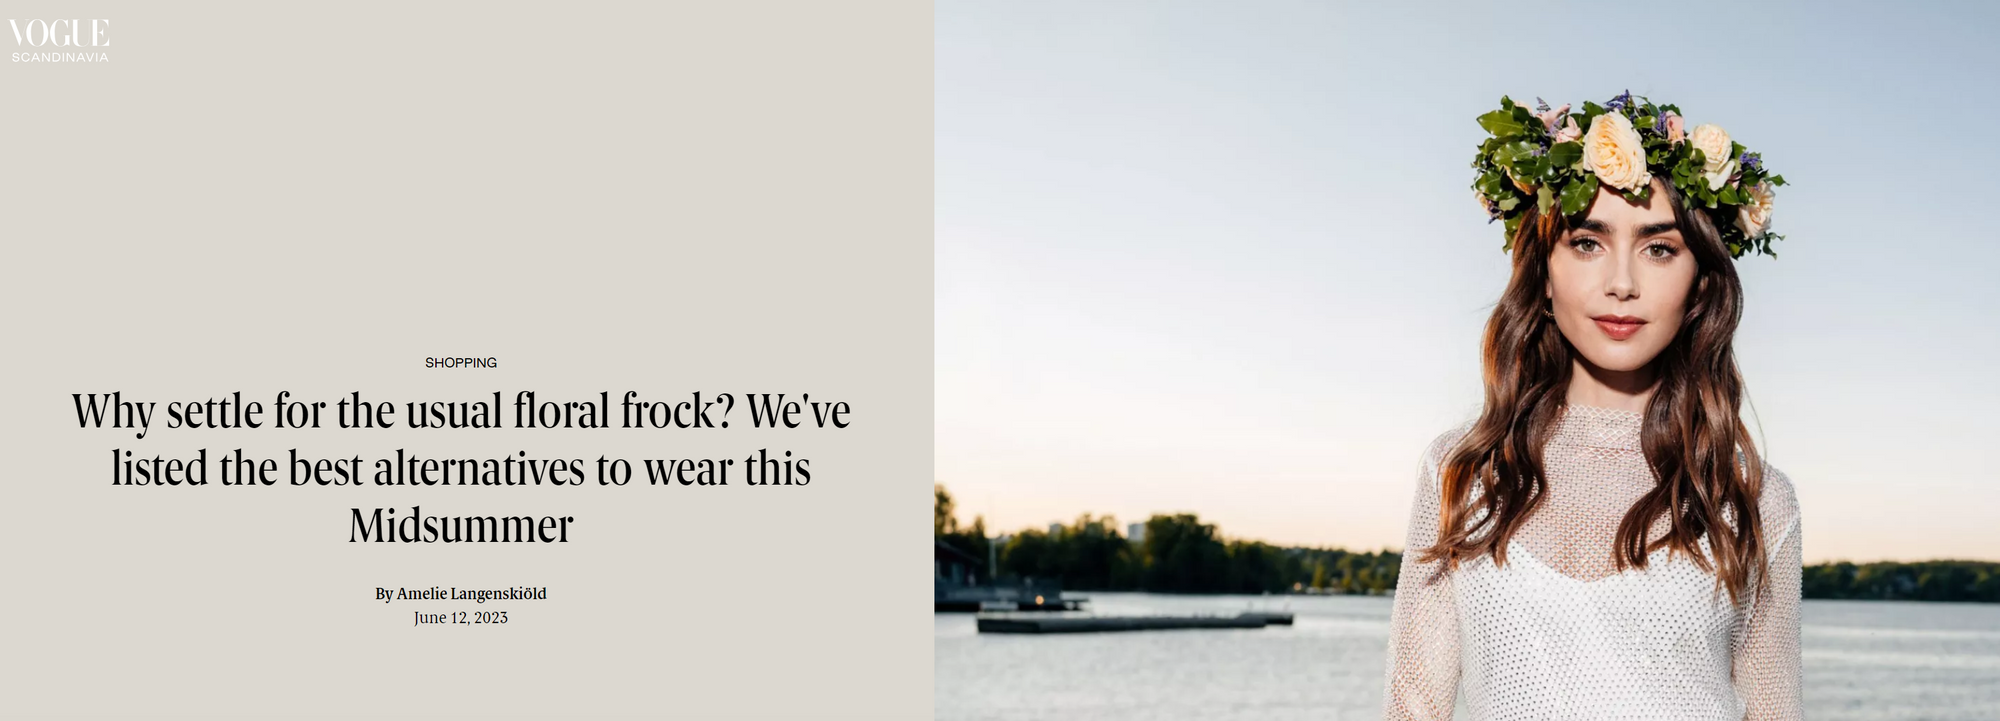 Vogue Scandinavia: Rivet Utility In Best Alternatives to Wear This Midsummer